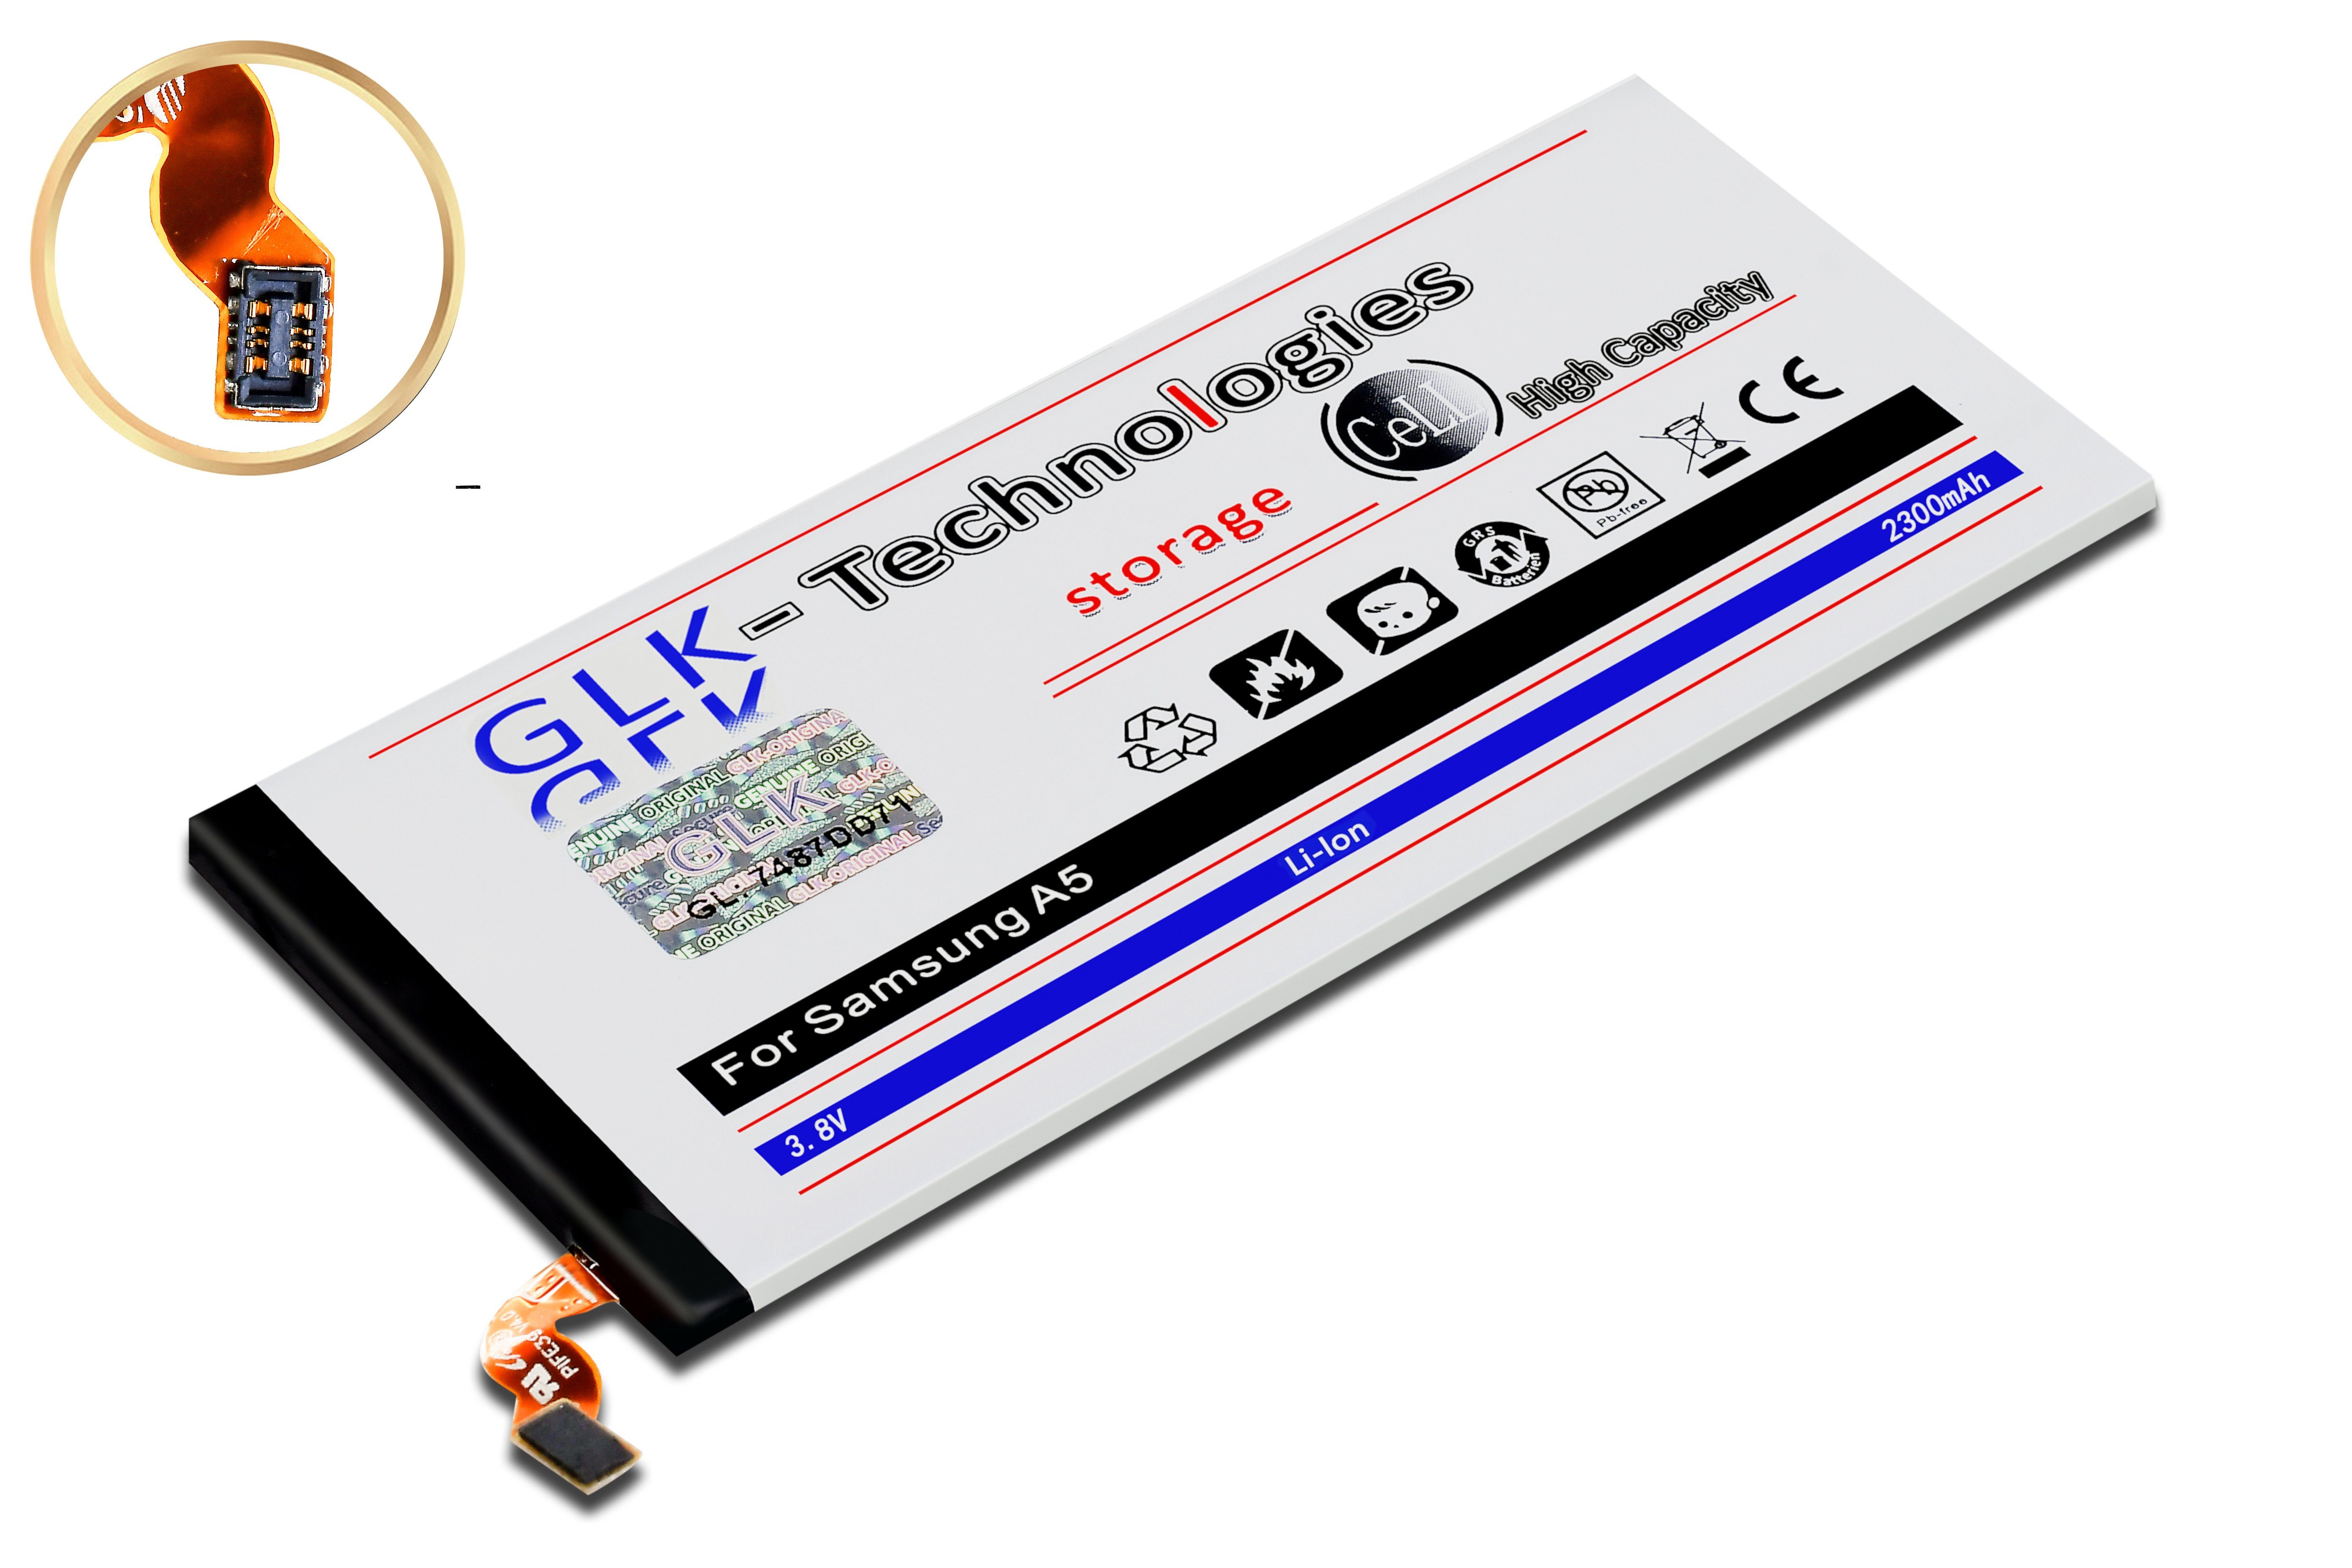 GLK-Technologies High Power Ersatzakku SM-A500F Samsung Werkzeug mAh A5 Akku, 2300 inkl. NEU GLK-Technologies mit V) kompatibel Battery, Set Galaxy accu, Smartphone-Akku mAh Kit EB-BA500ABE, Original 2300 (3.8 2015